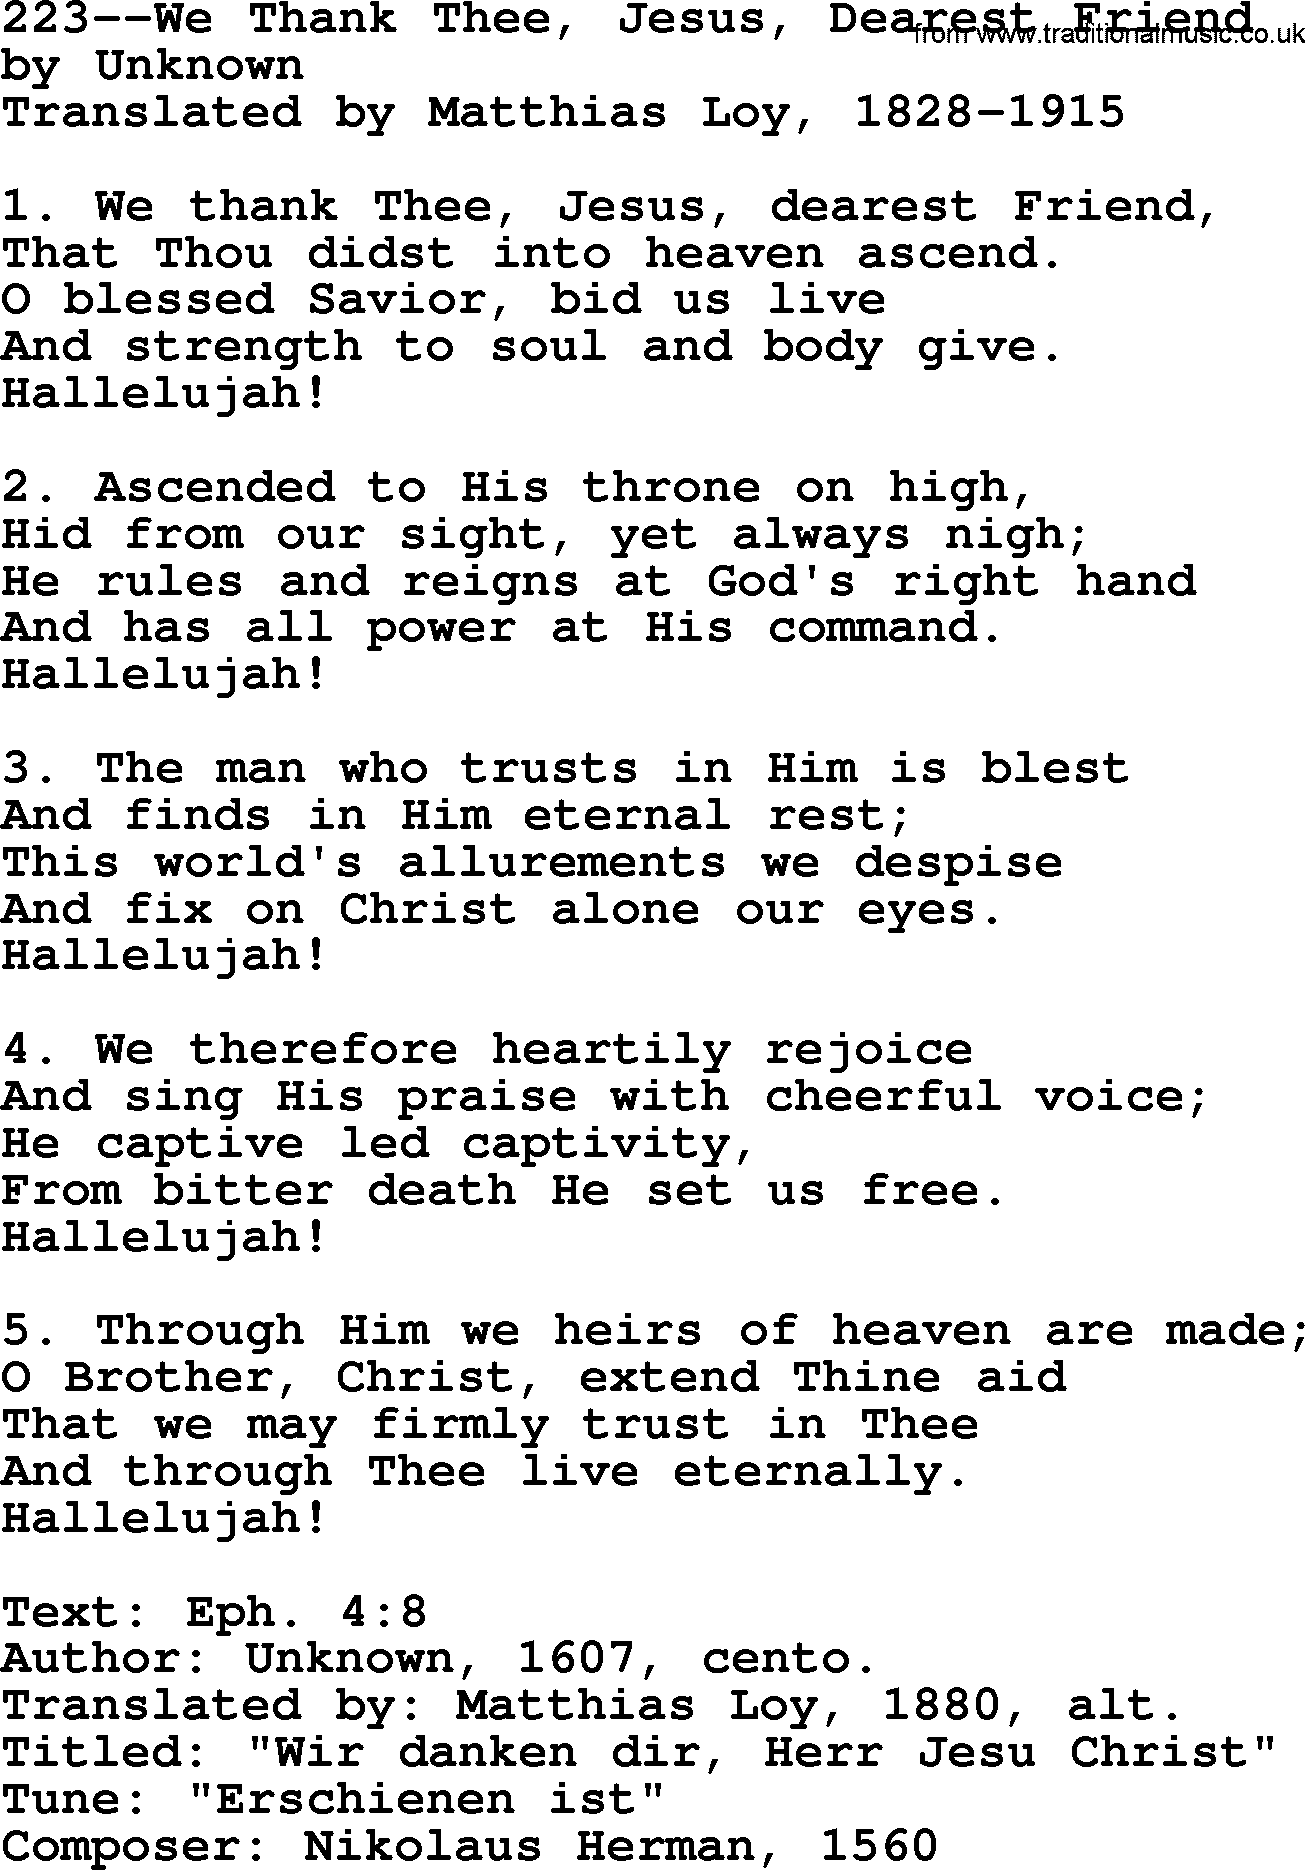 Lutheran Hymn: 223--We Thank Thee, Jesus, Dearest Friend.txt lyrics with PDF